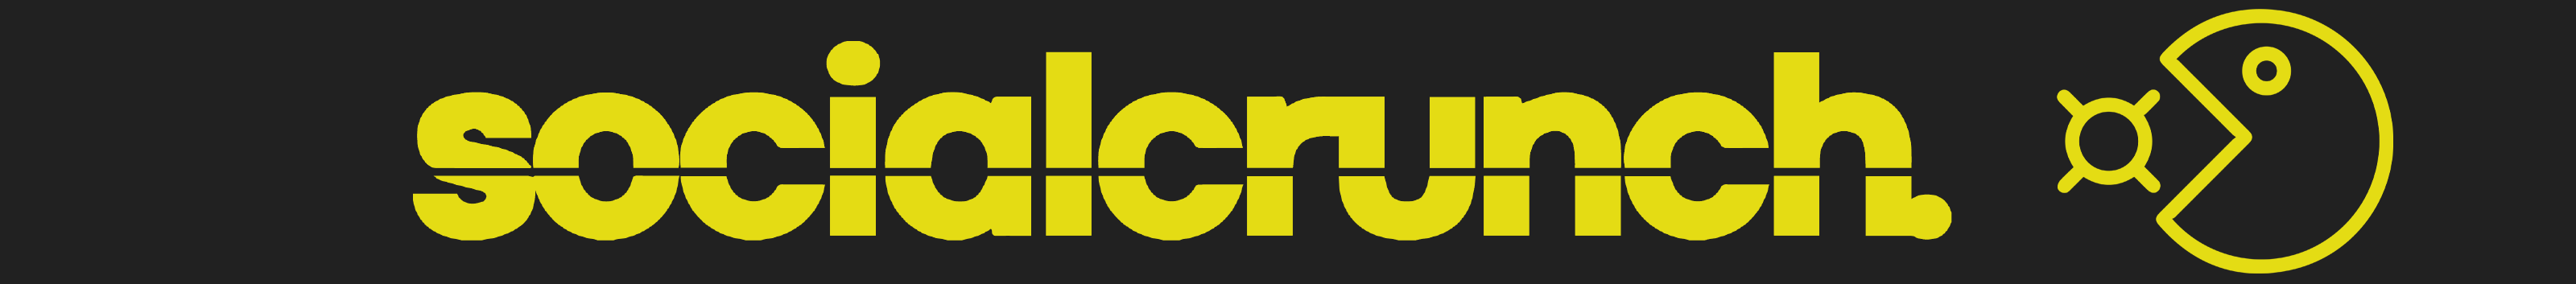 Social Crunch's profile banner